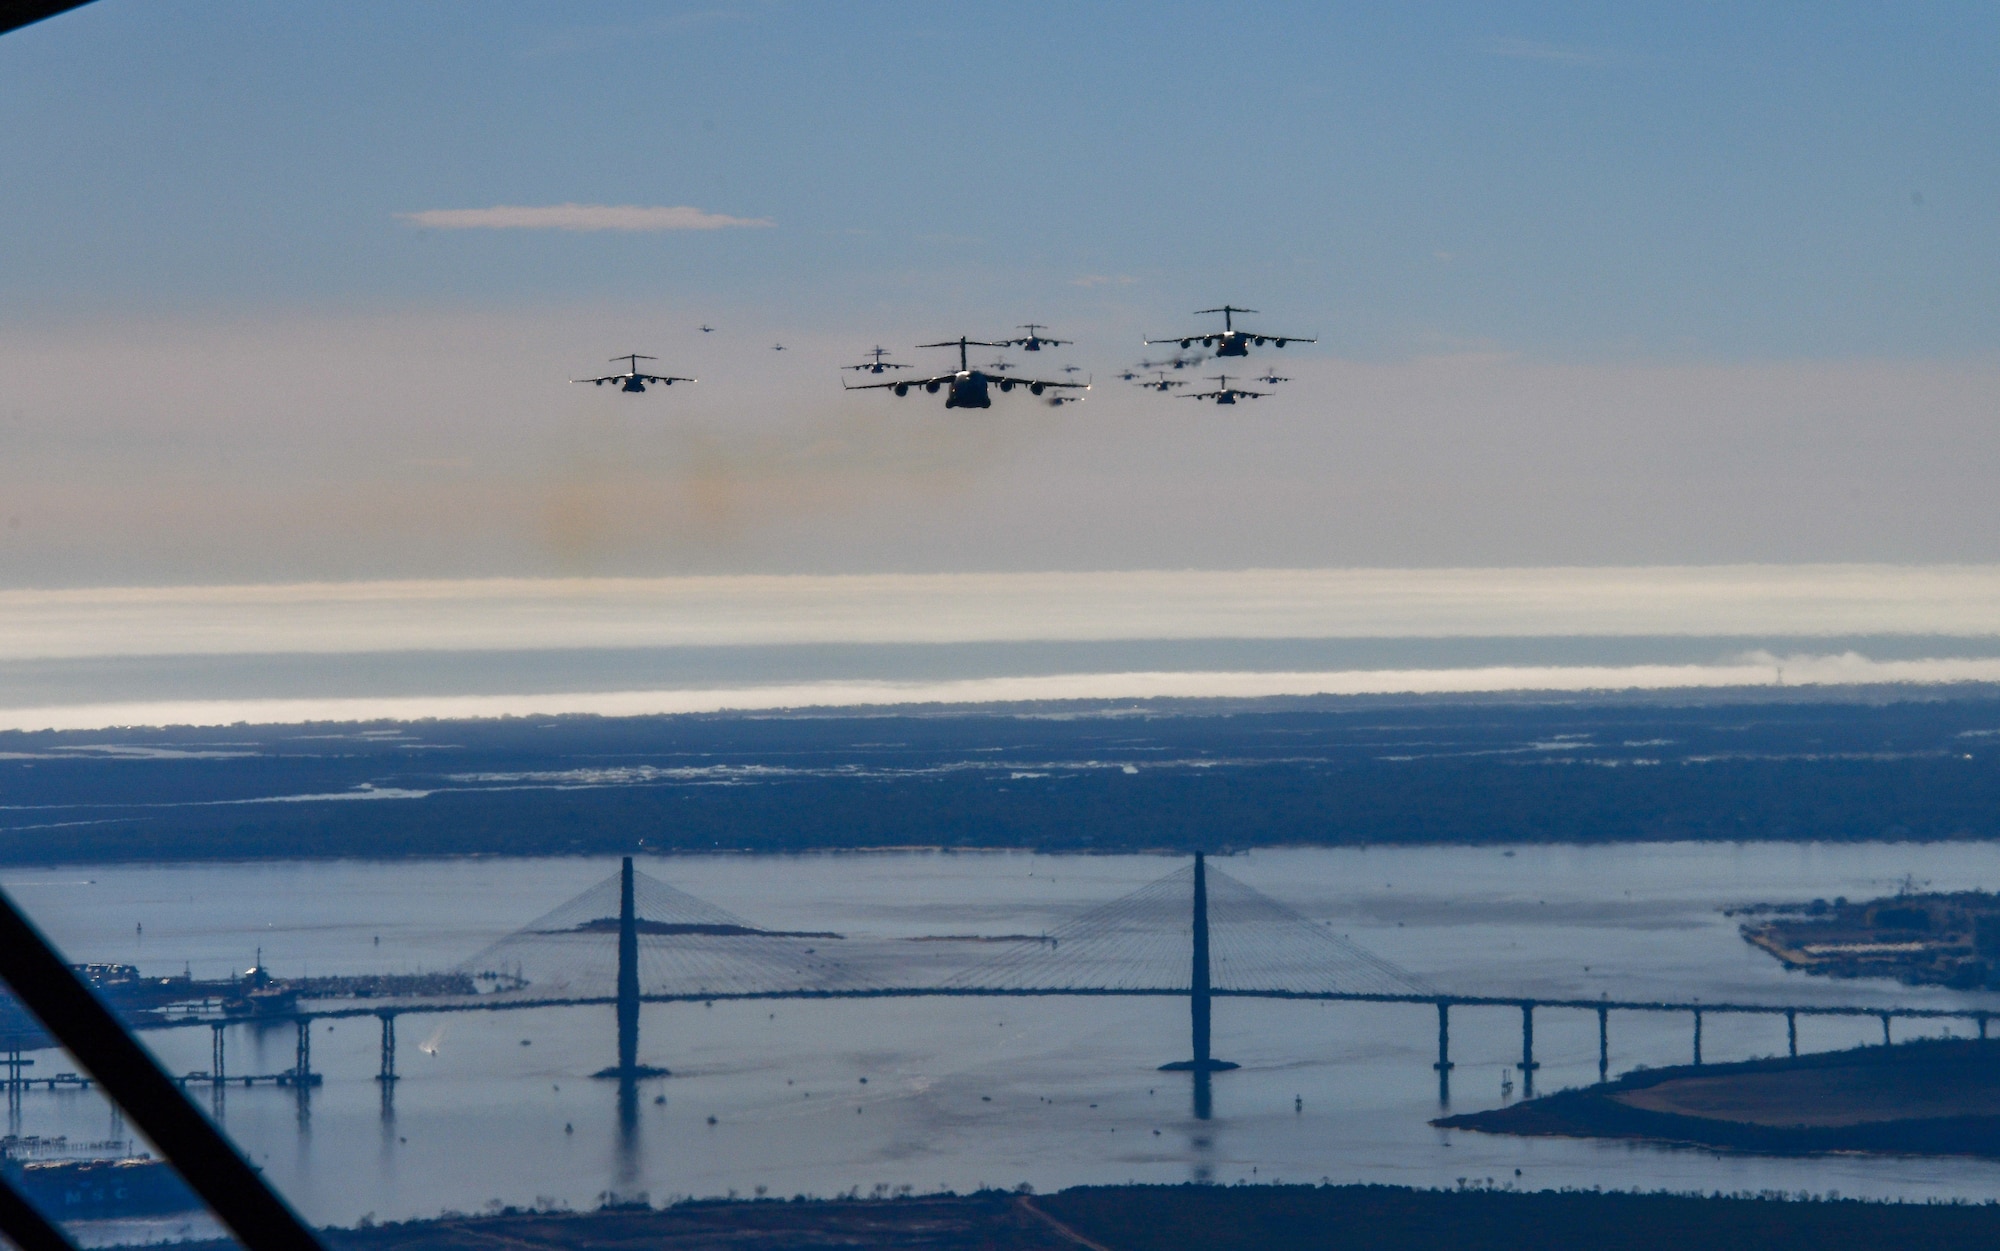 A photo of 24 Aircraft fly over a bridge.